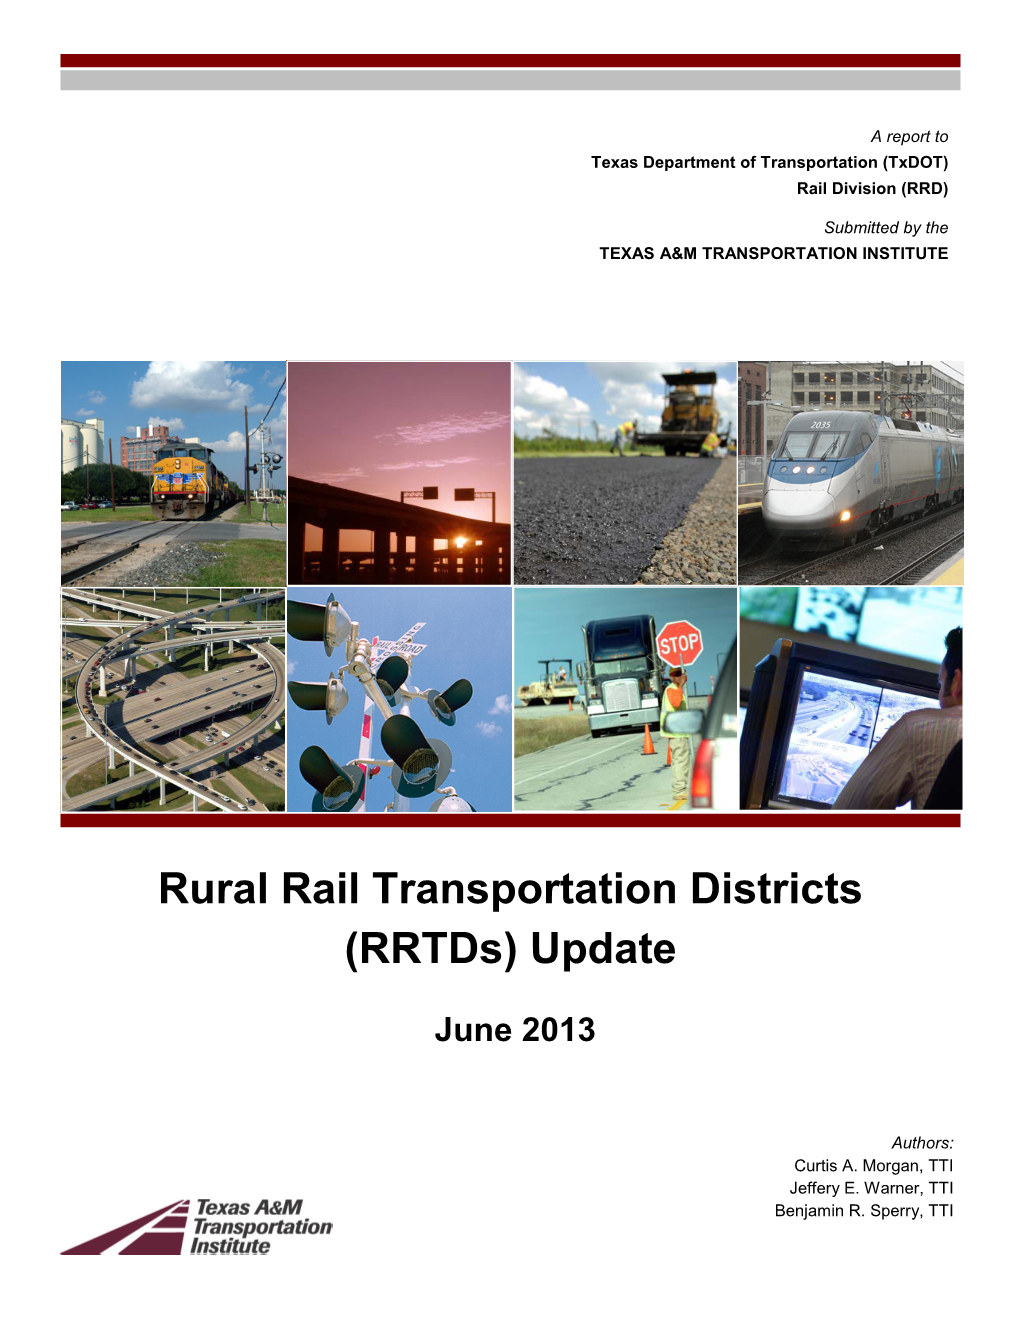 Rural Rail Transportation Districts (Rrtds) Update